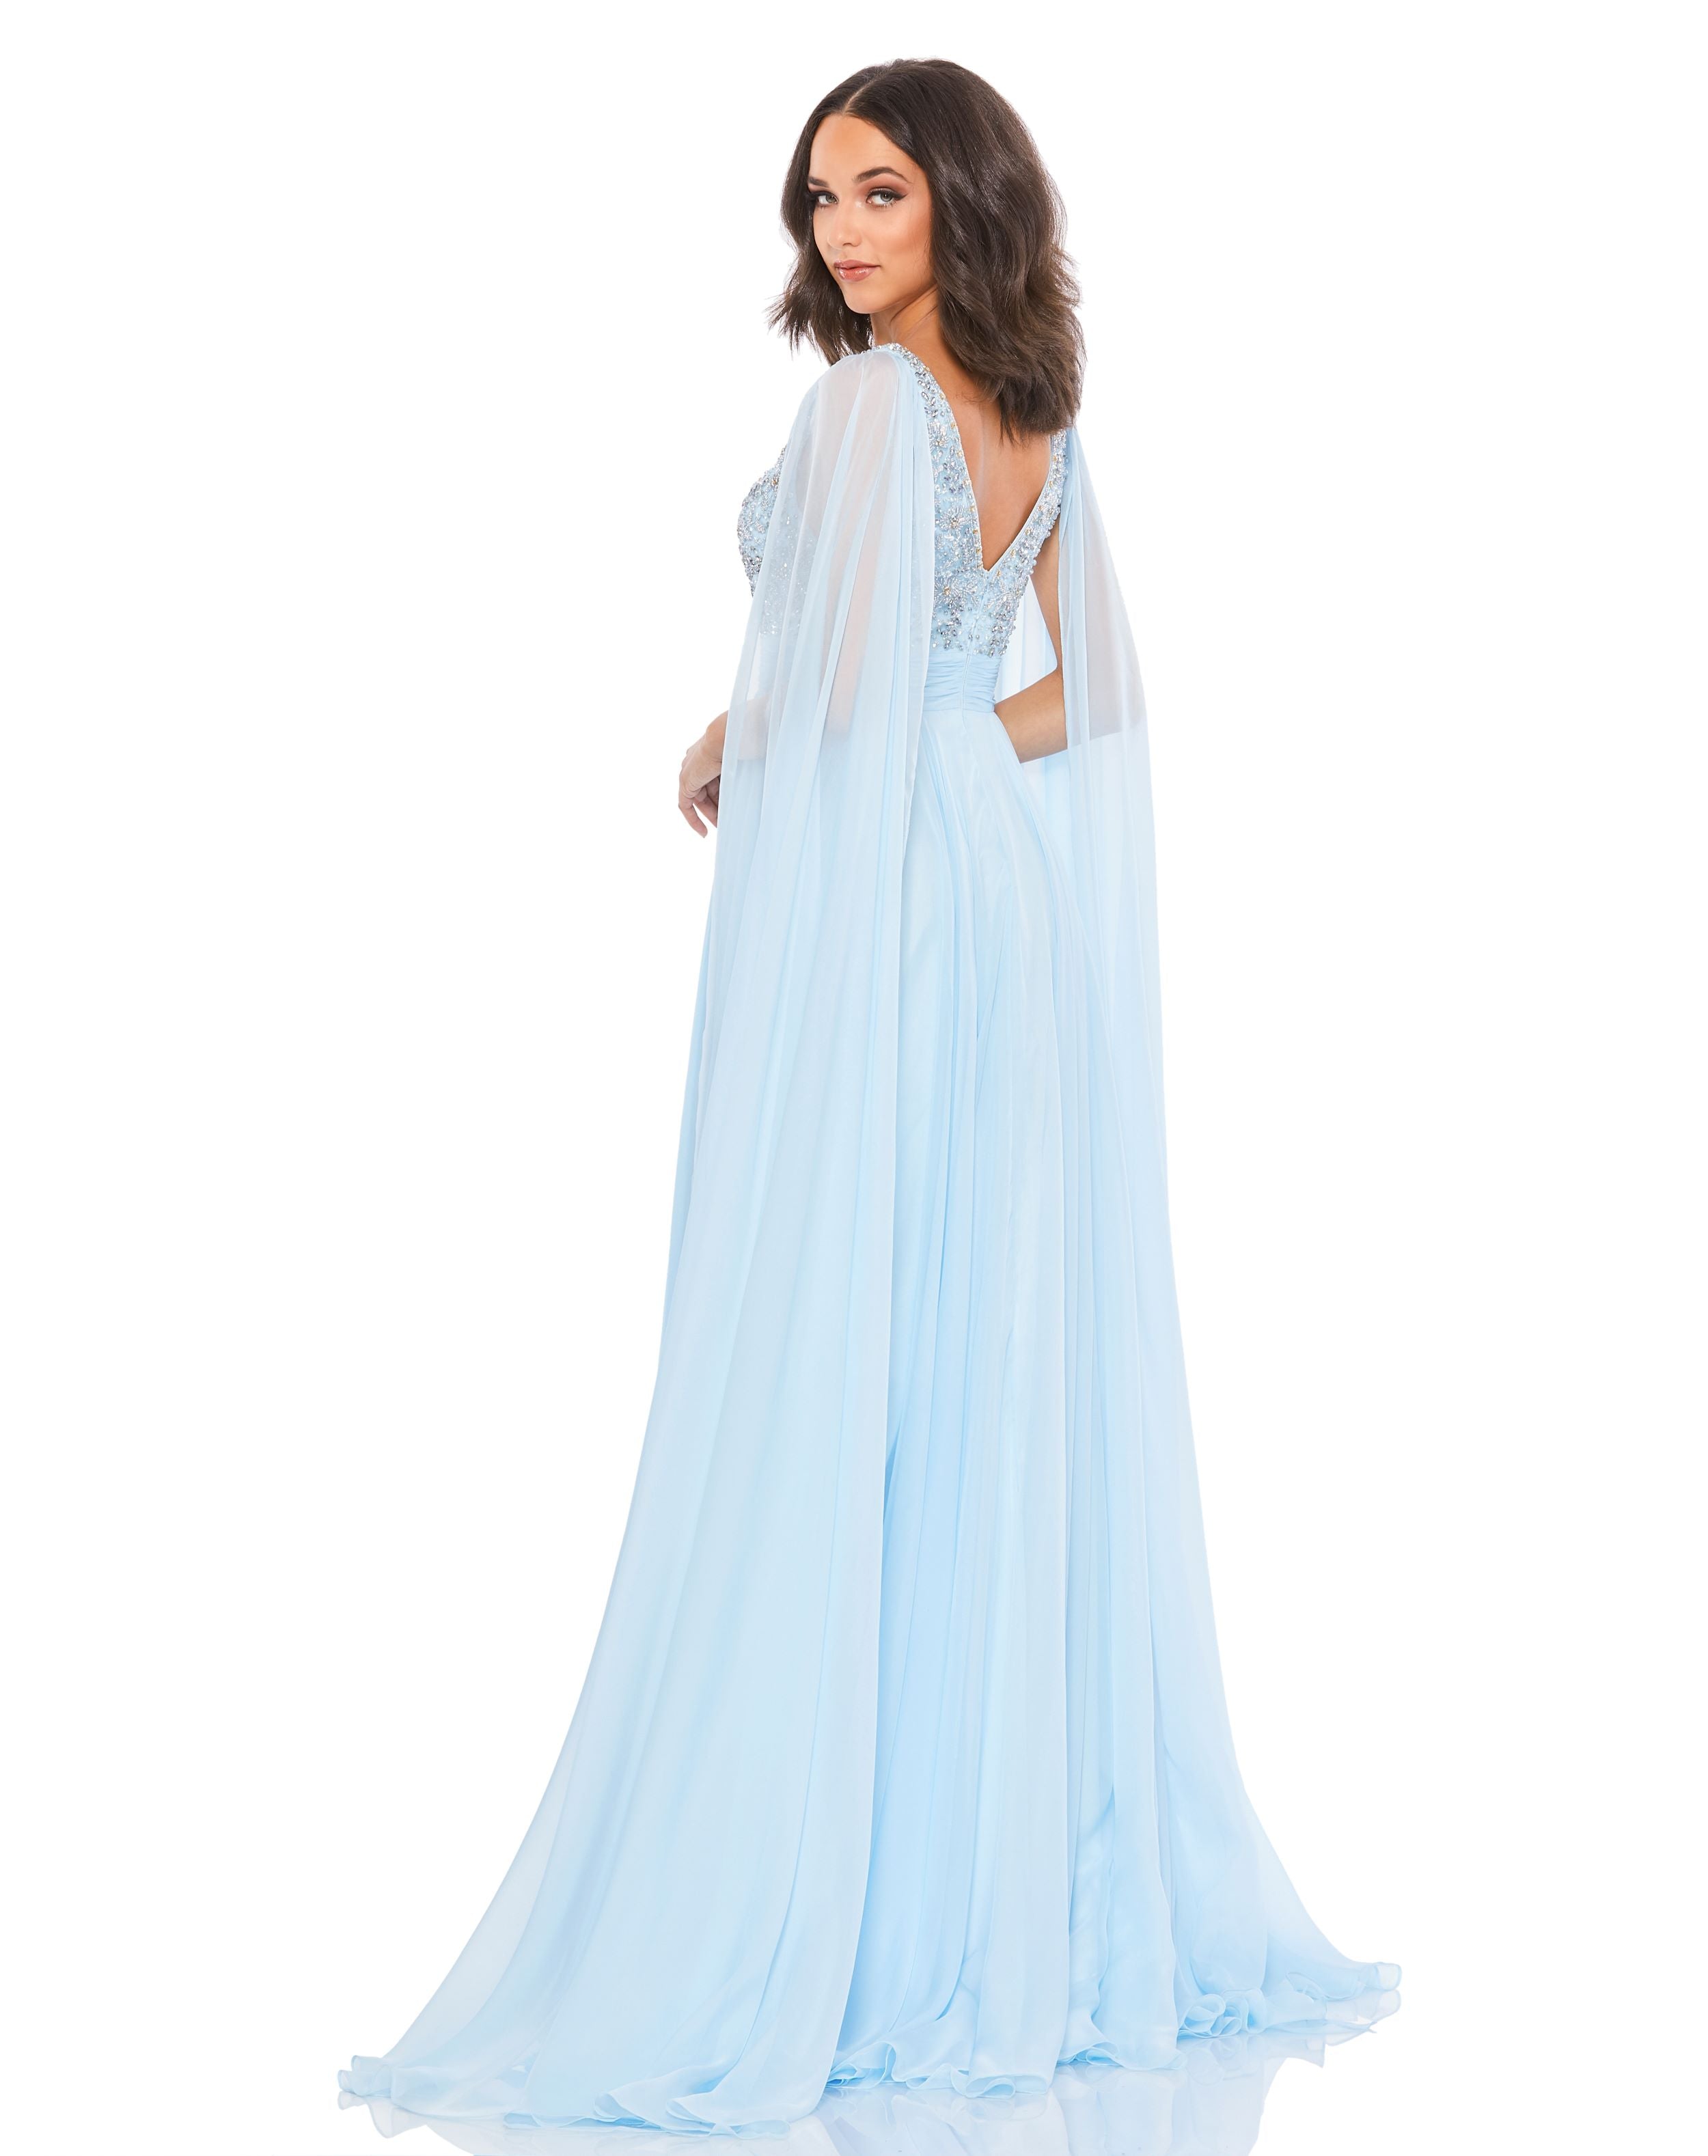 Chiffon Cape Sleeve Embellished Gown | Sample | Sz. 2